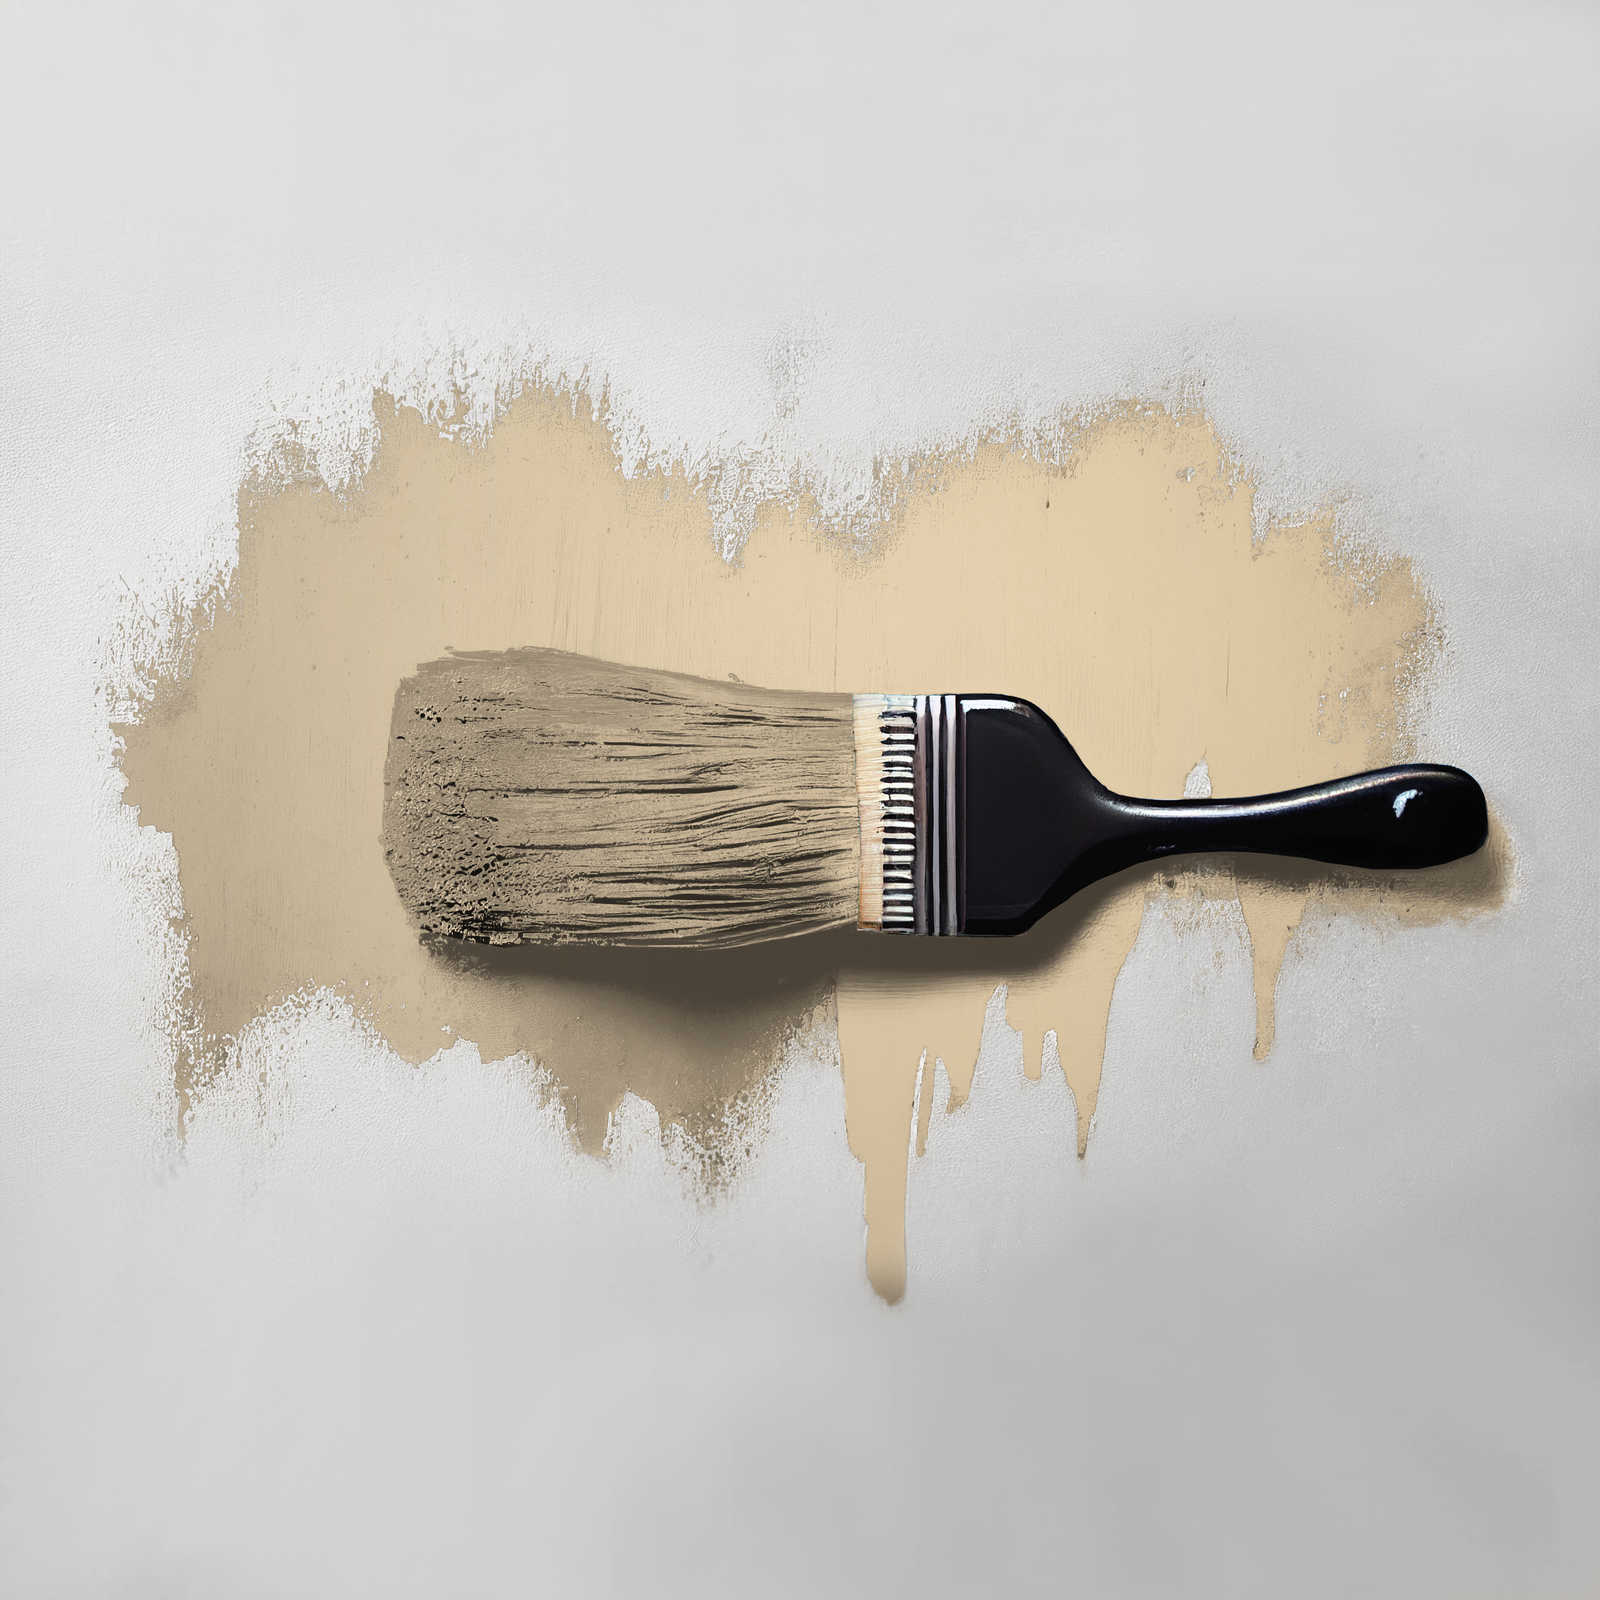             Peinture murale TCK6003 »Asthetic Artichoke« en beige confortable – 5,0 litres
        